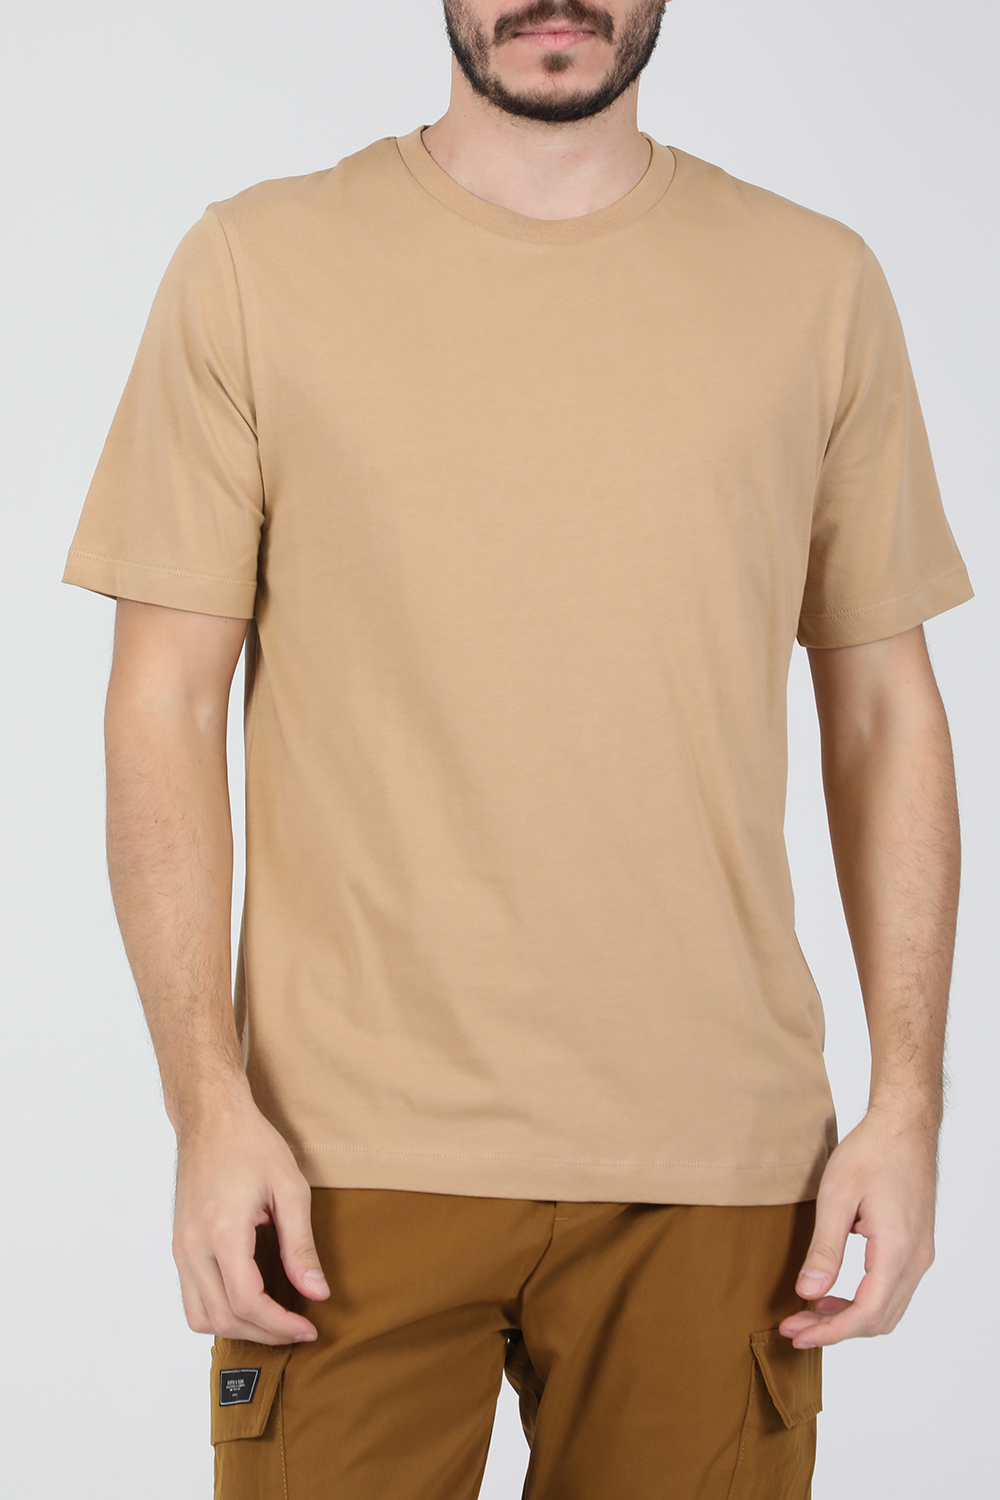 SCOTCH & SODA – Ανδρικό t-shirt SCOTCH & SODA Jersey μπεζ 1821136.0-0104